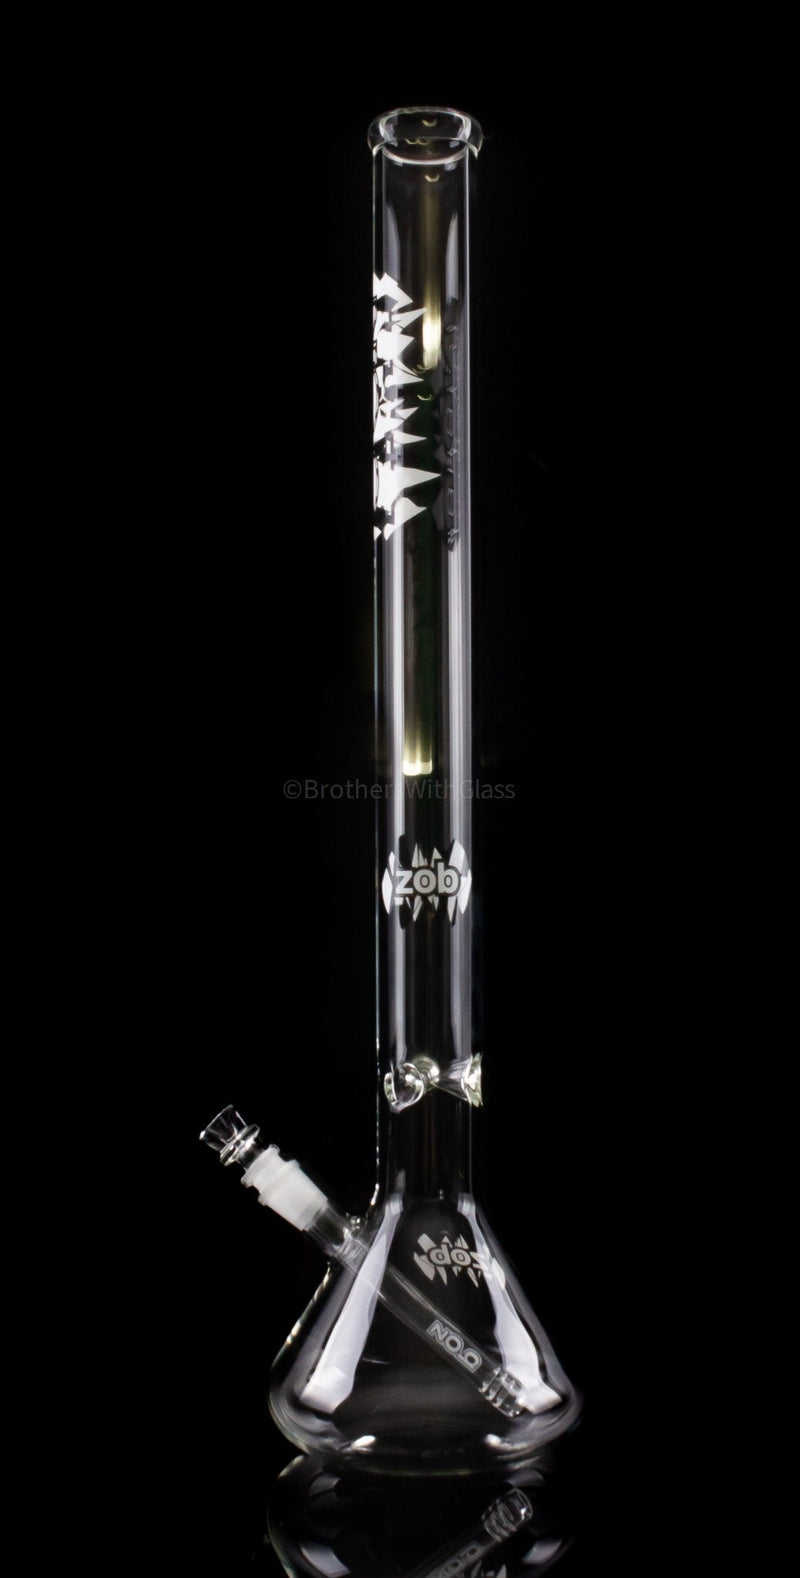 Zob Glass 24 Inch Tall Beaker Bong - 14mm.